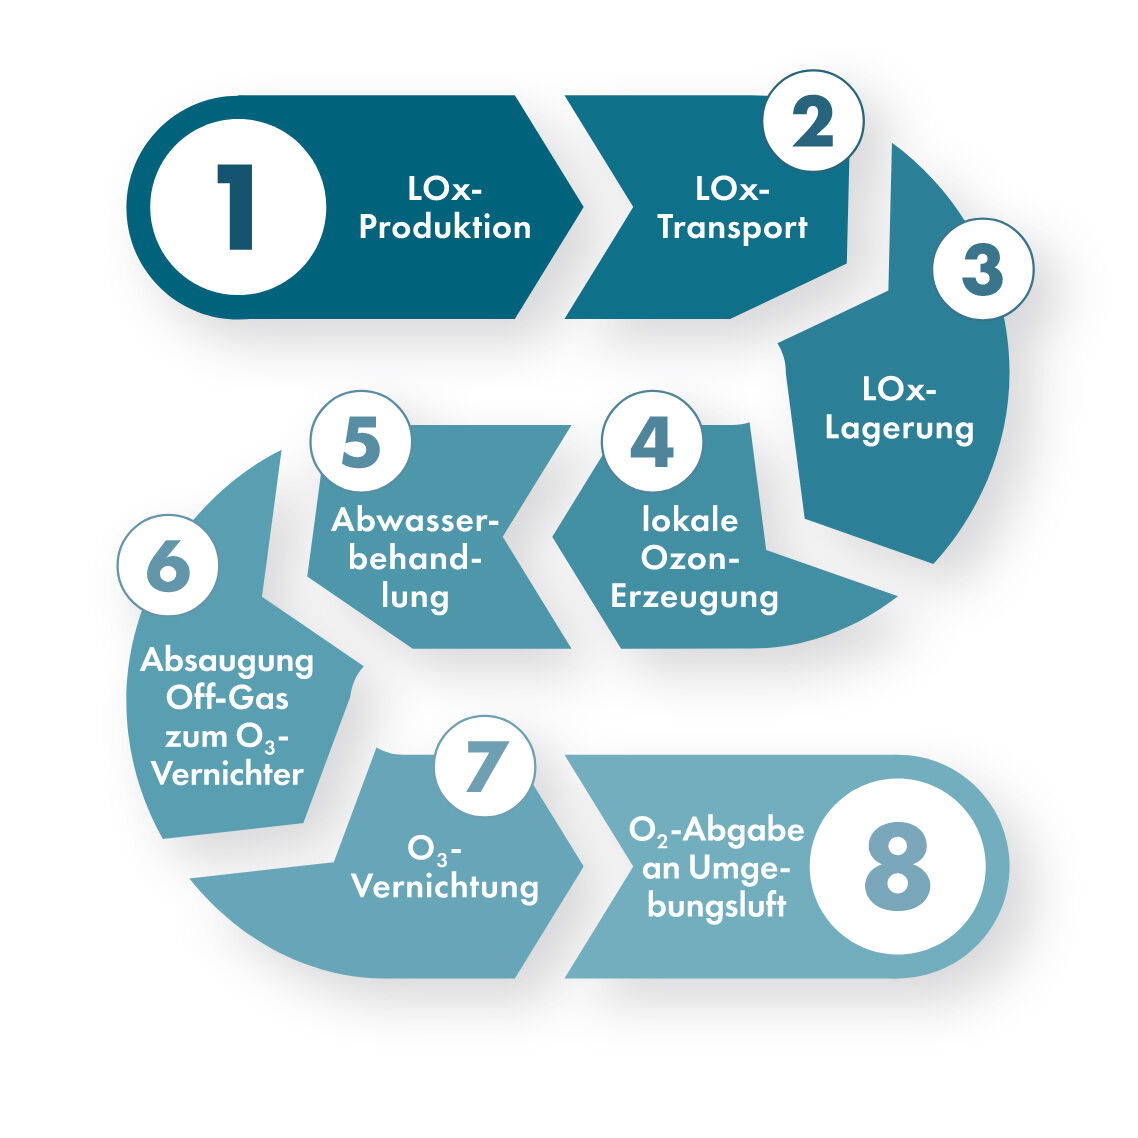 Blaue Infografik visualisiert STATE OF THE ART-Abwasseraufbereitung in 8 Schritten